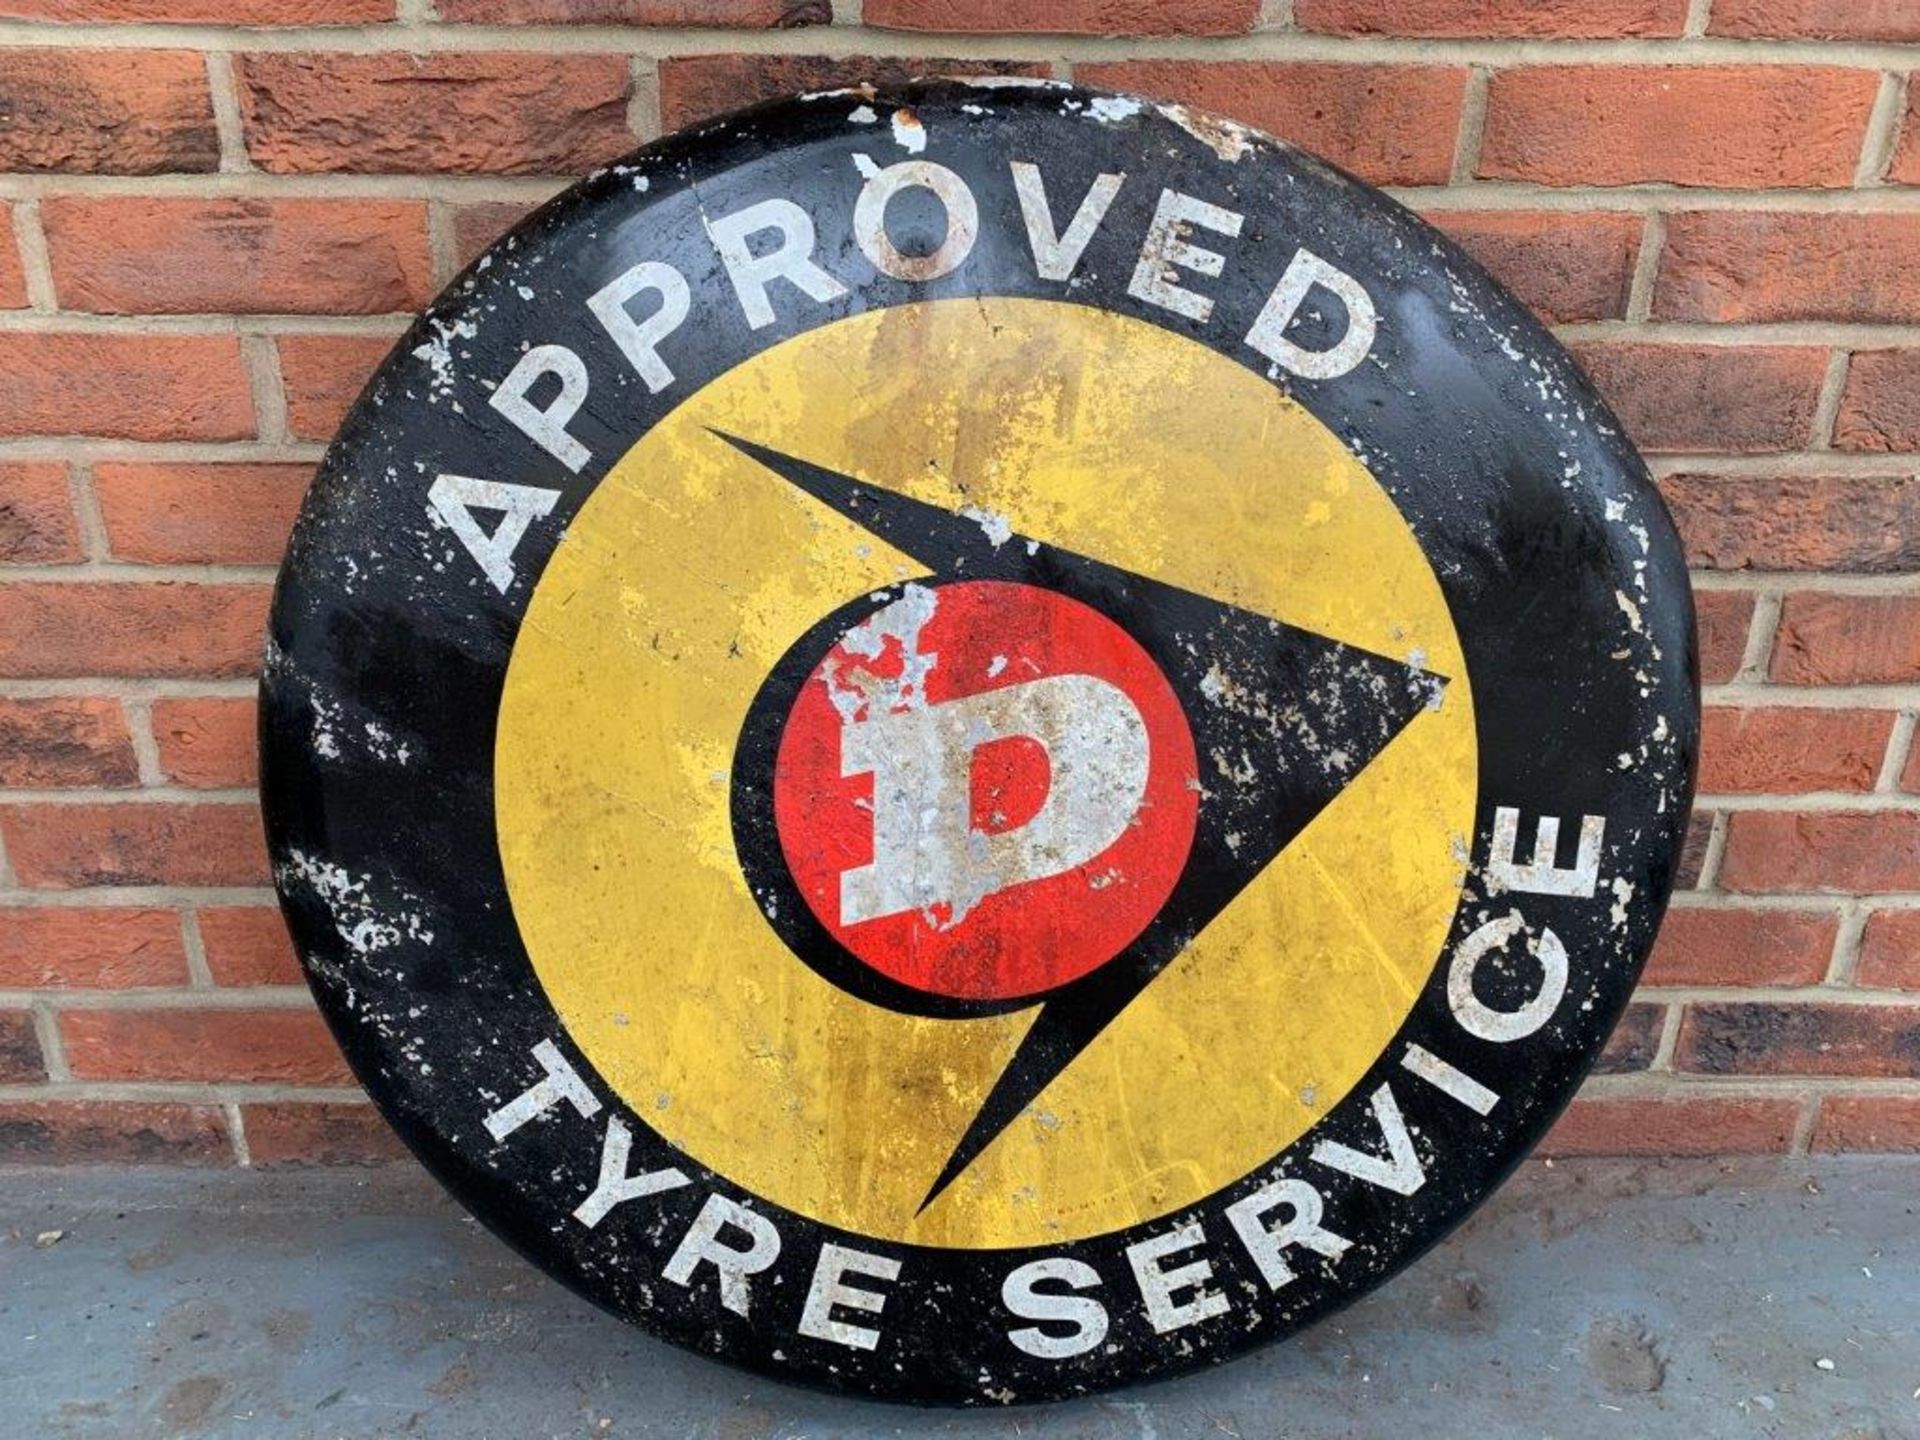 Original Dunlop Approved Tyre Service Aluminium Sign